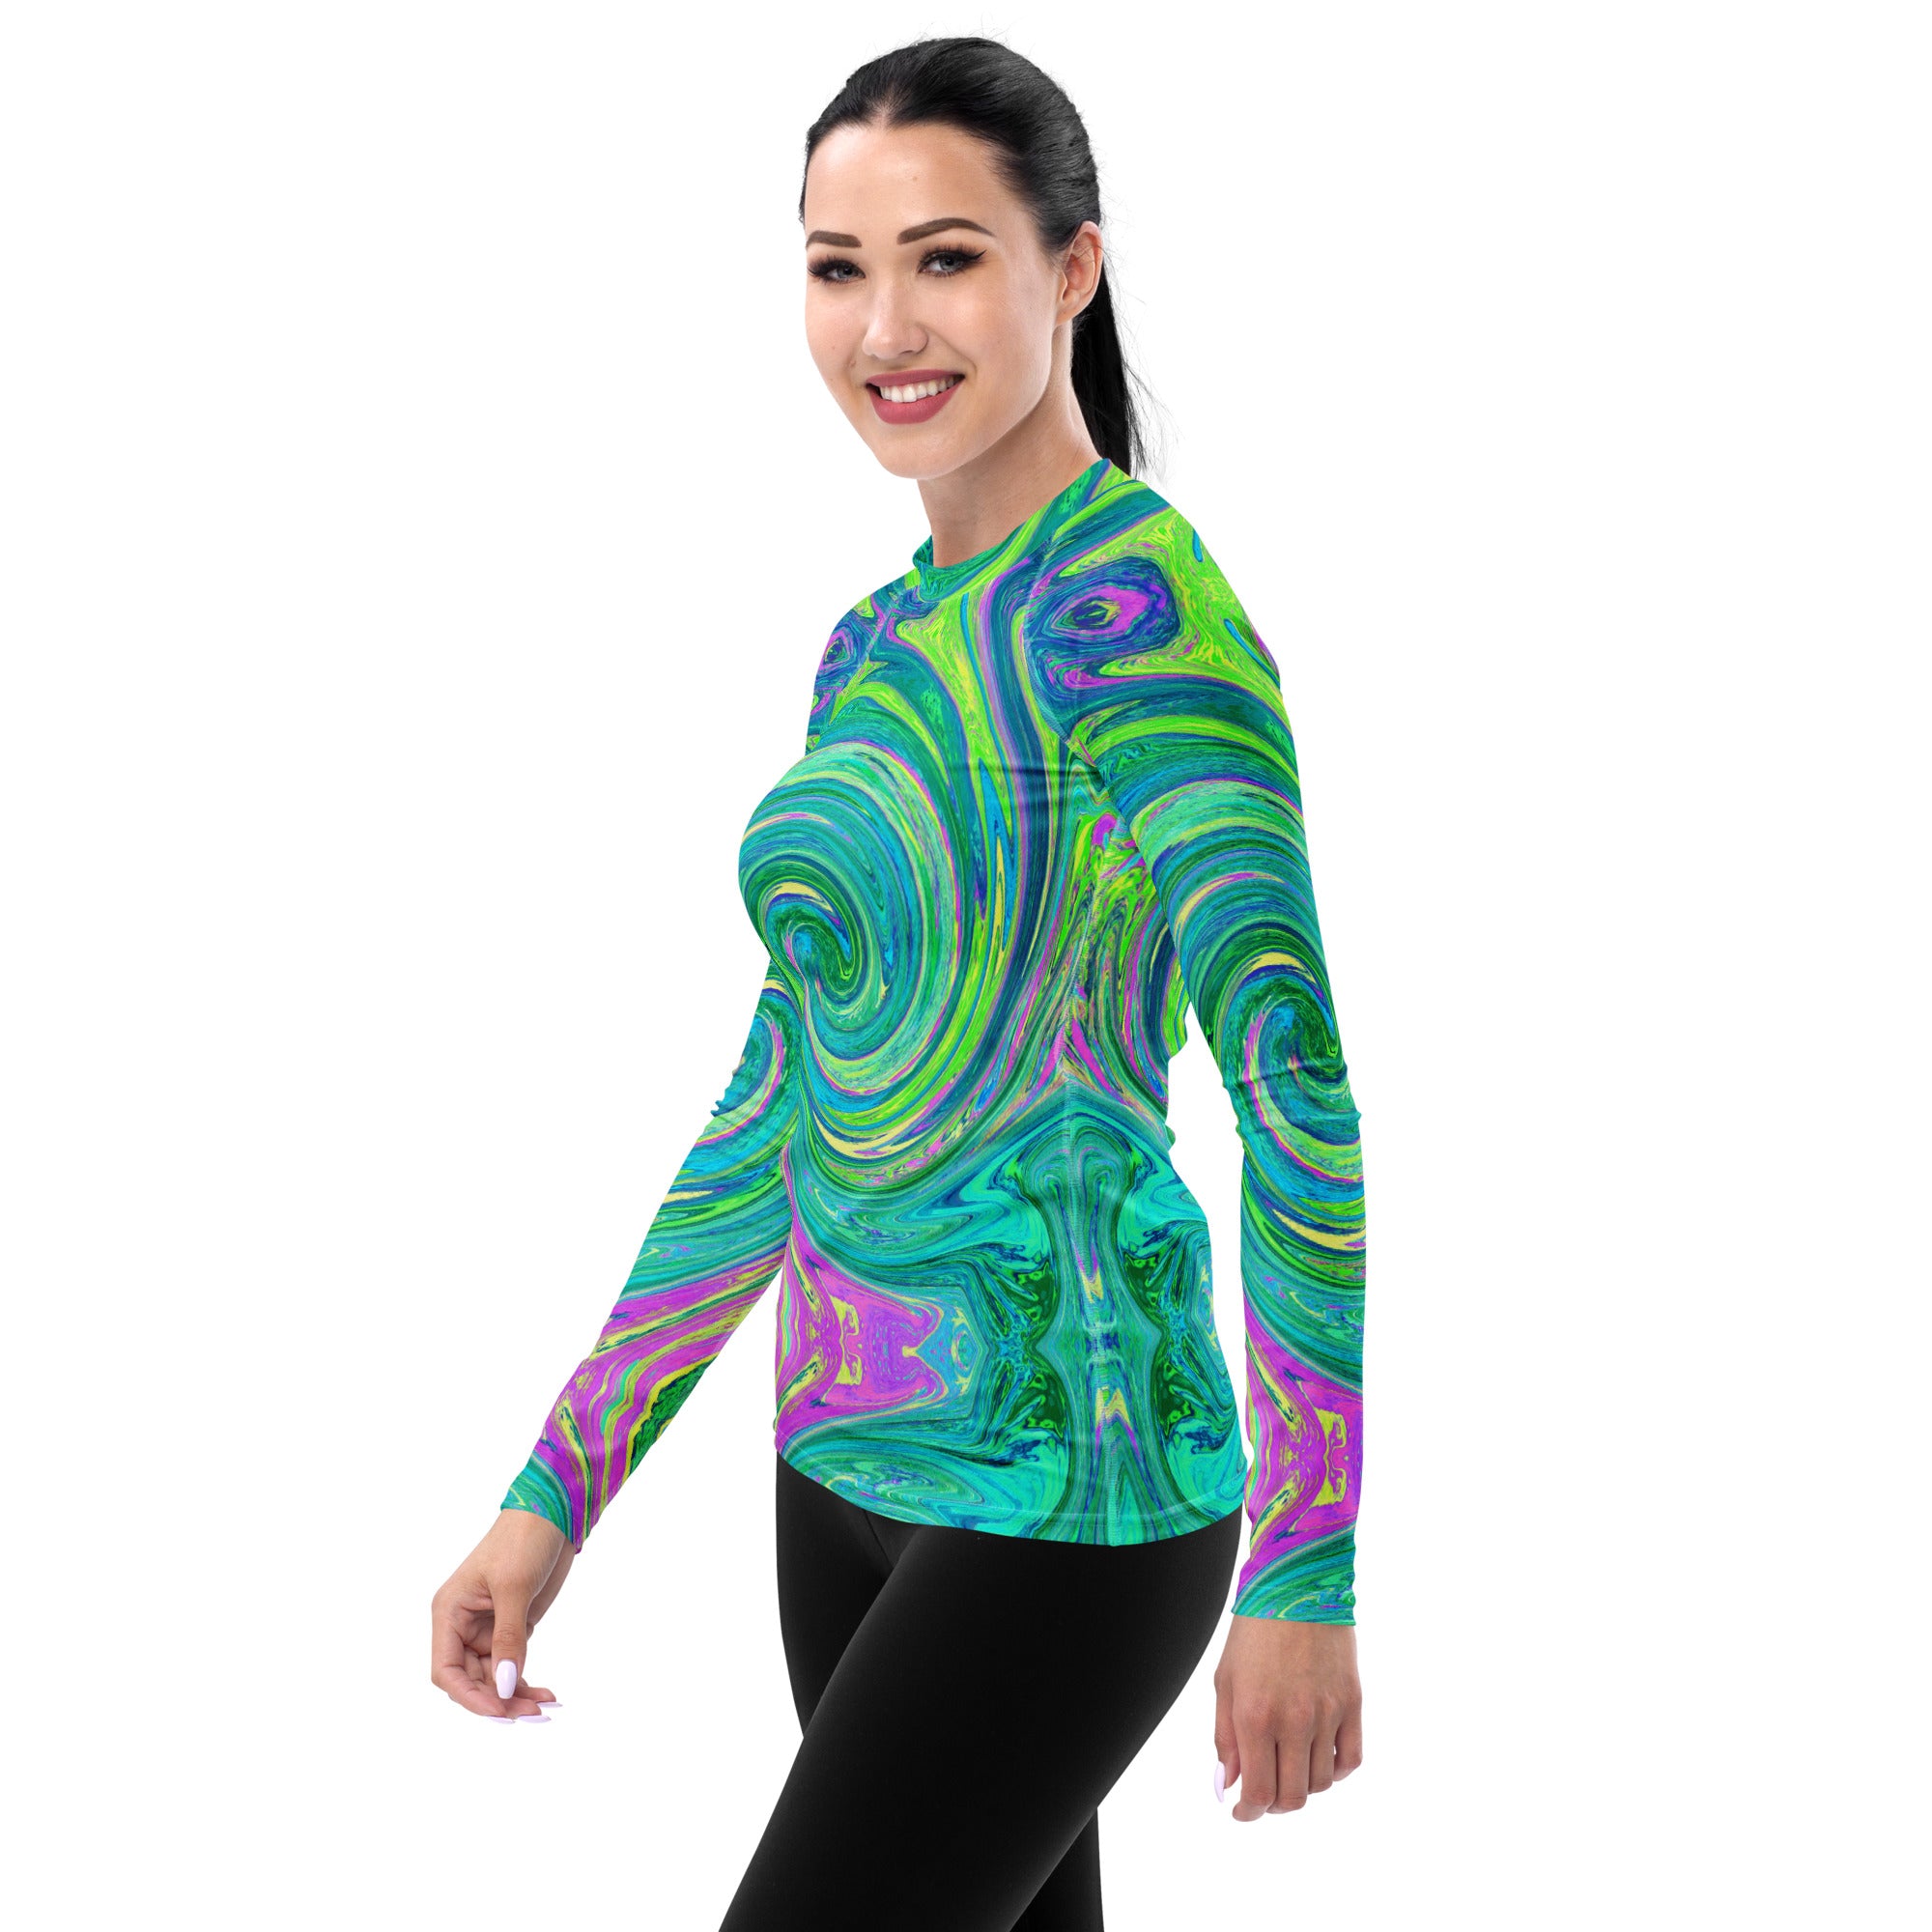 Women's Rash Guard Shirts - Groovy Abstract Retro Aquamarine Swirl